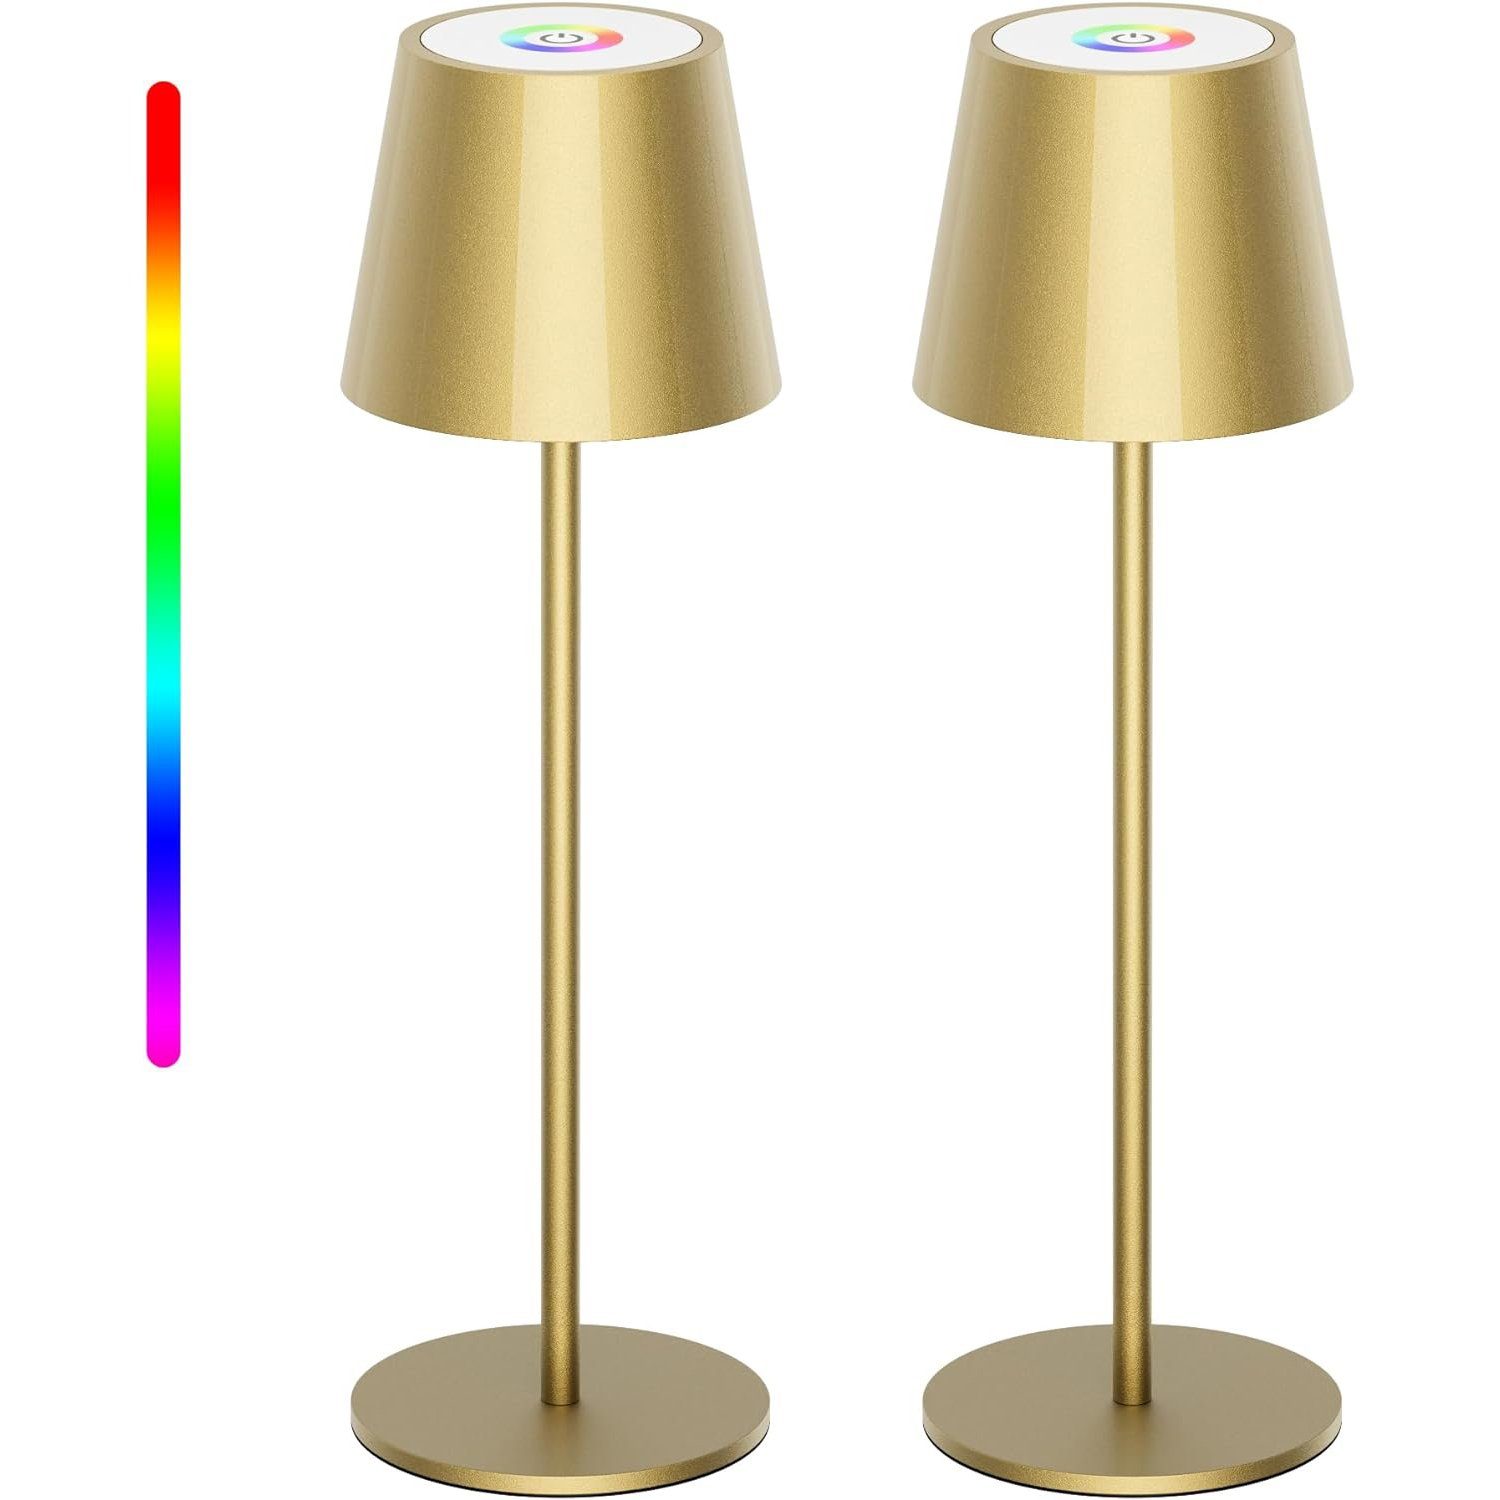 IN3LED1USBM - Multicolor USB Lampe USB Leuchte Schwanenhalsleuchte